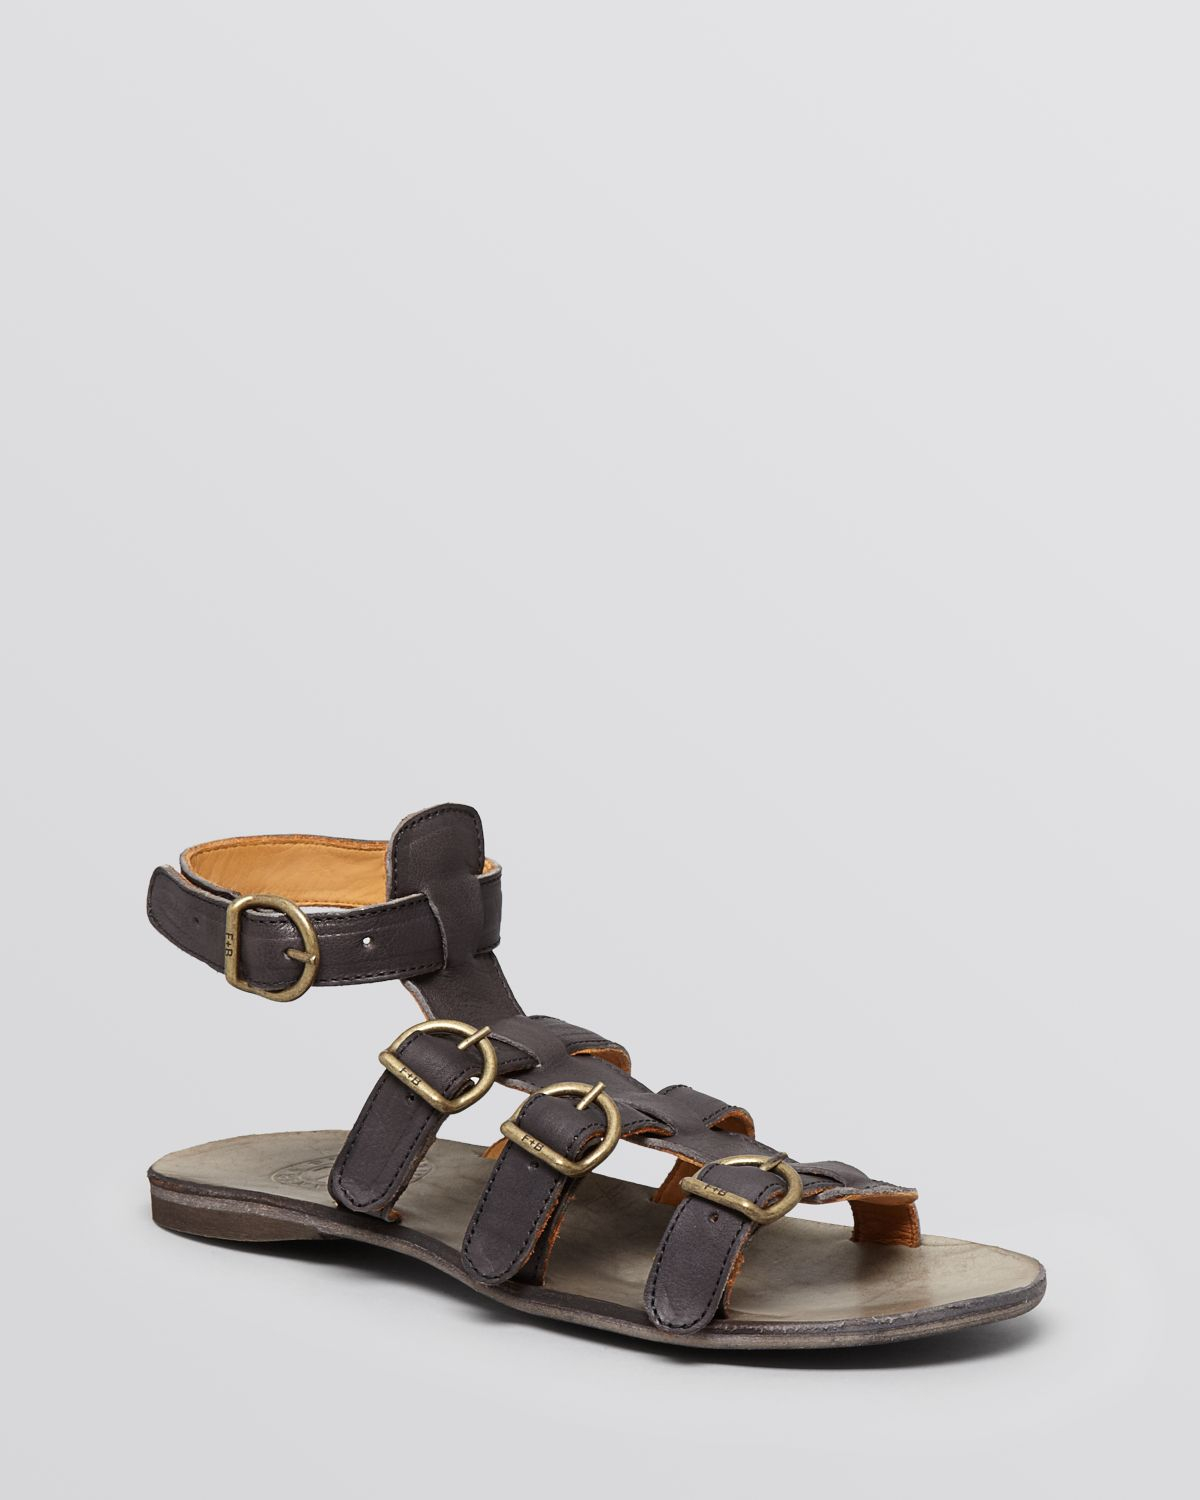 Lyst - Fiorentini + Baker Flat Gladiator Sandals Thea in Gray